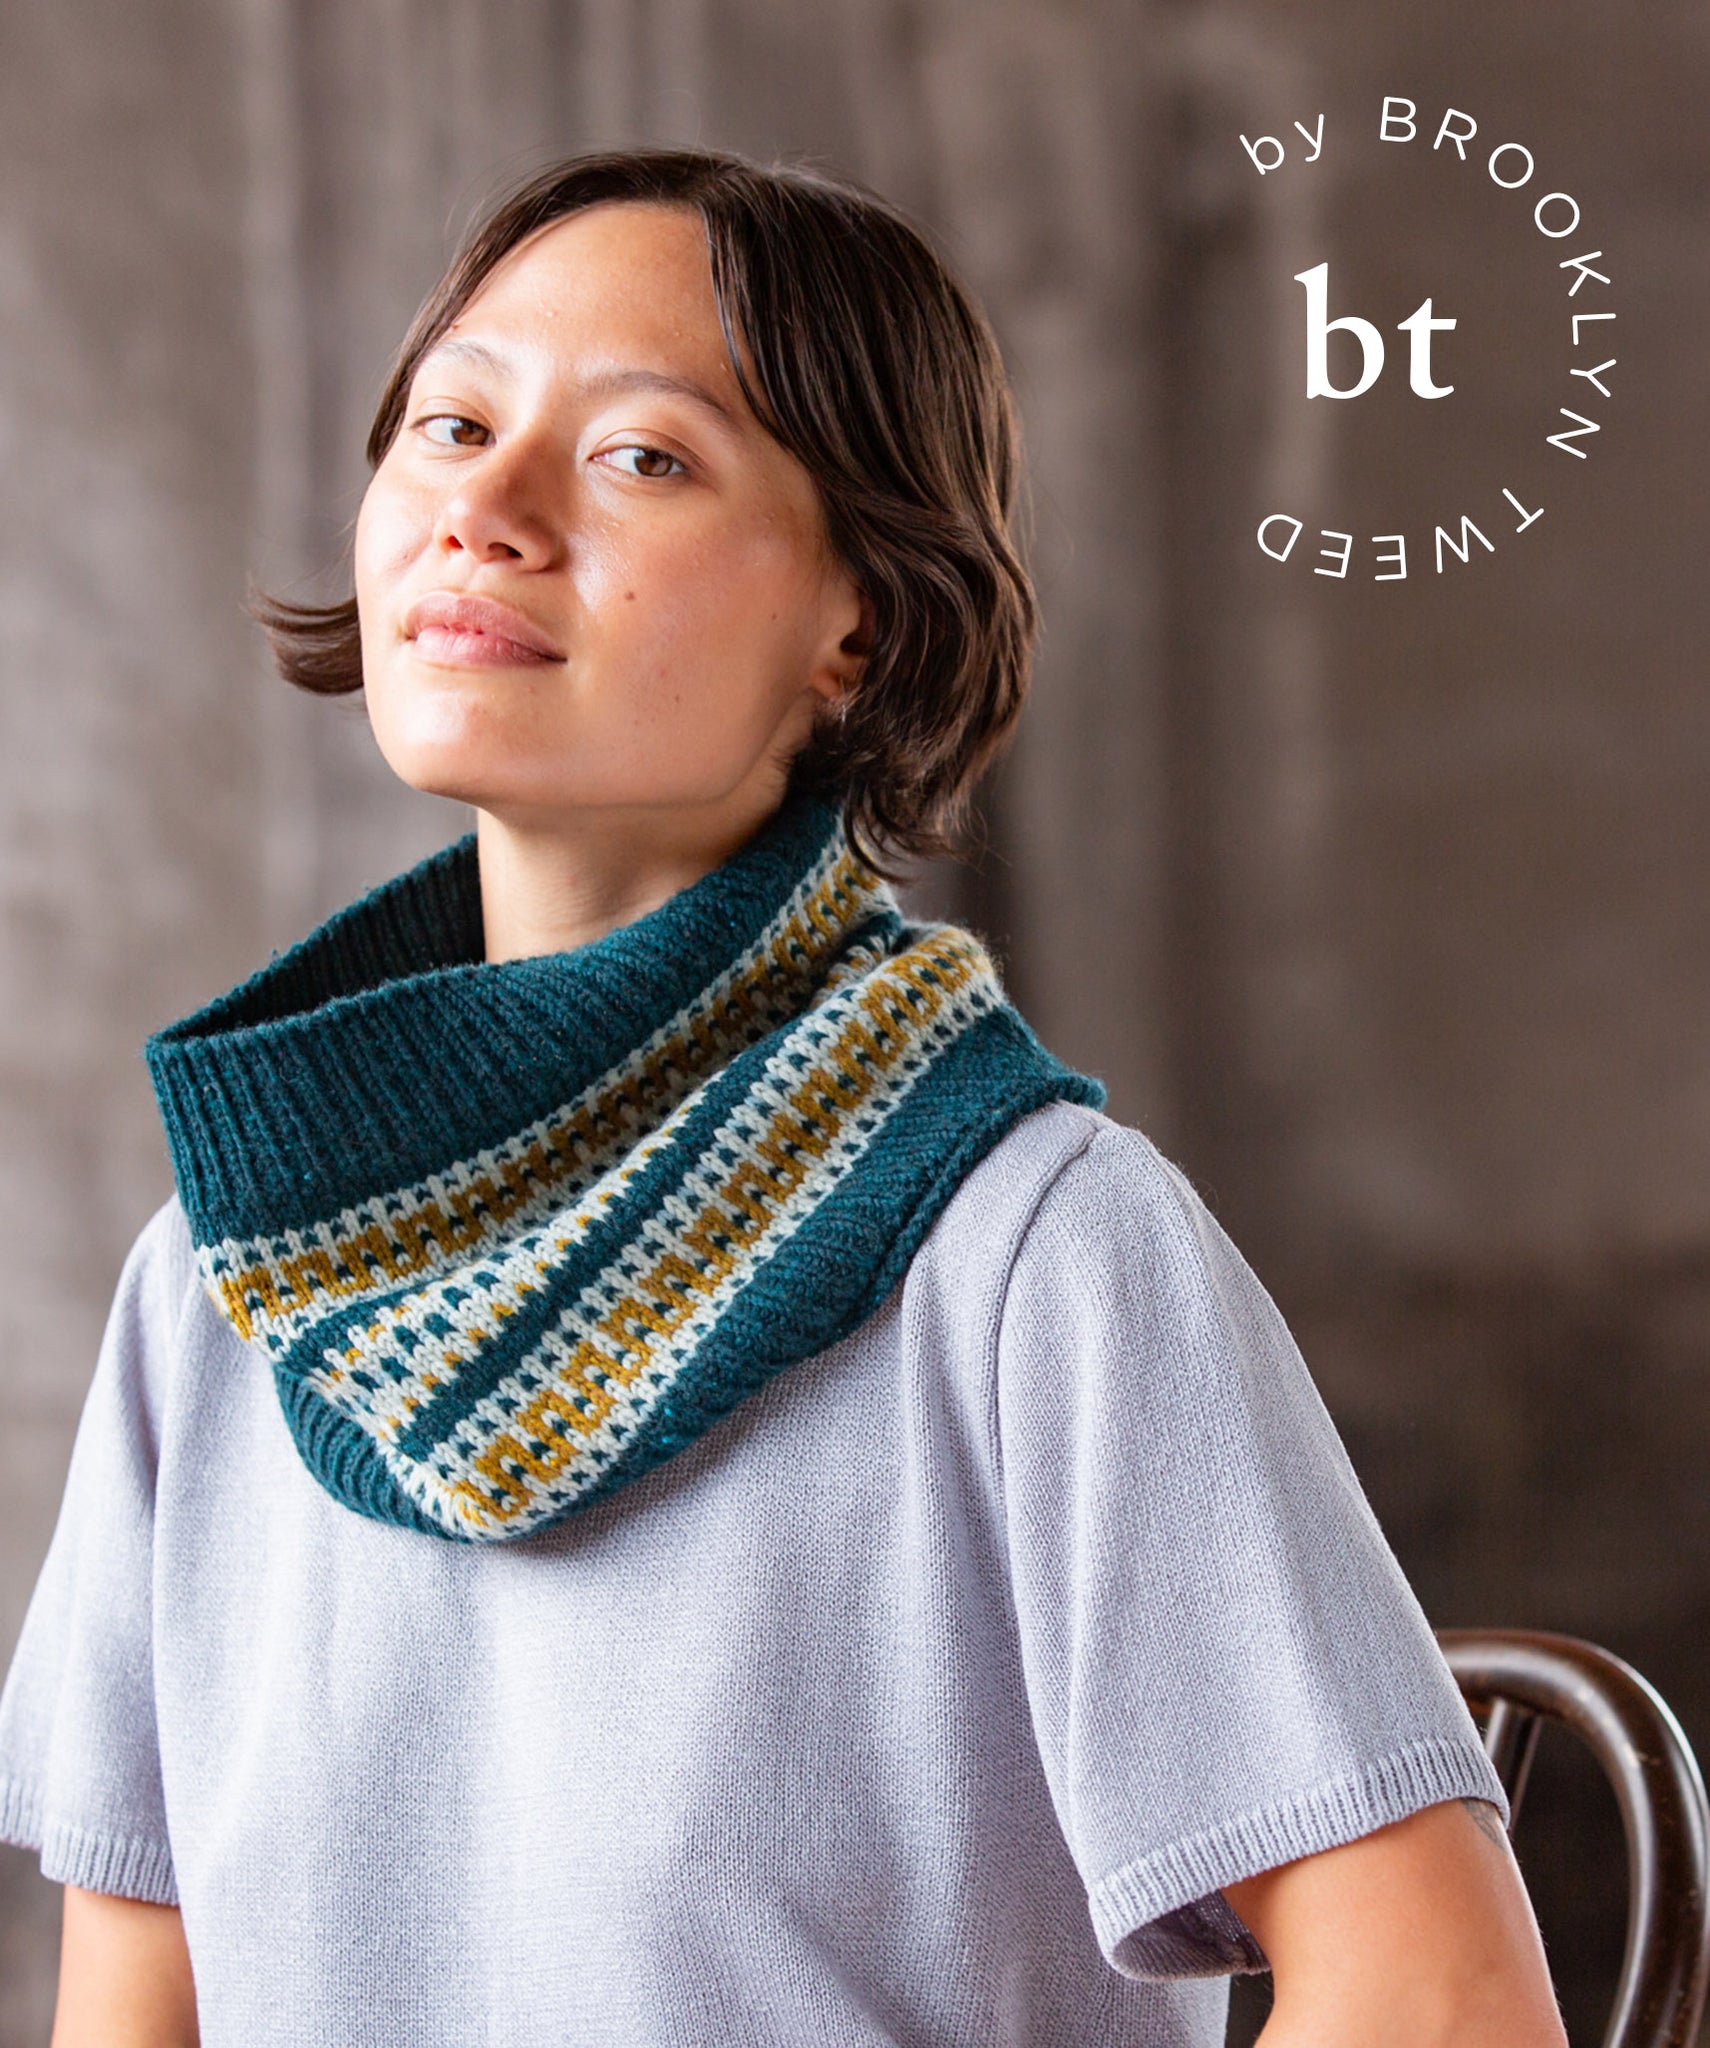 First Colorwork Cowl | Knitting Pattern | BT by Brooklyn Tweed